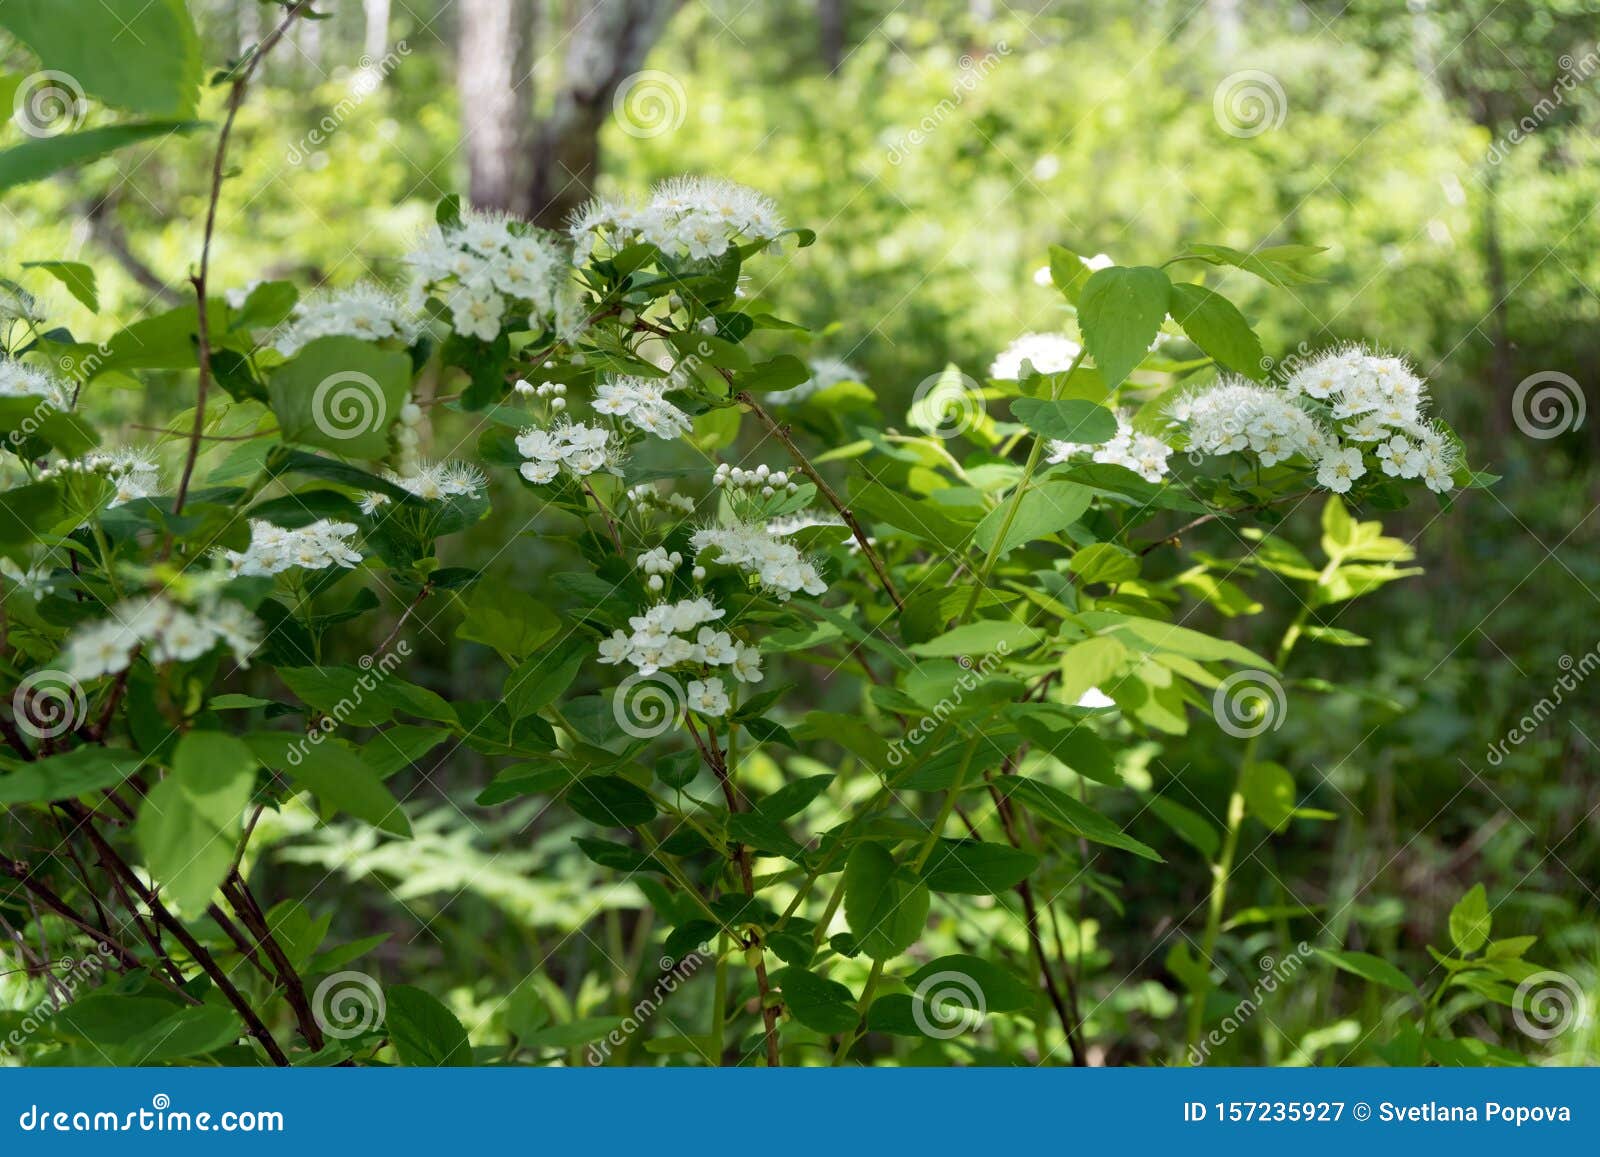 bush flowering spirea white lat. spiraea alba grows in the forest